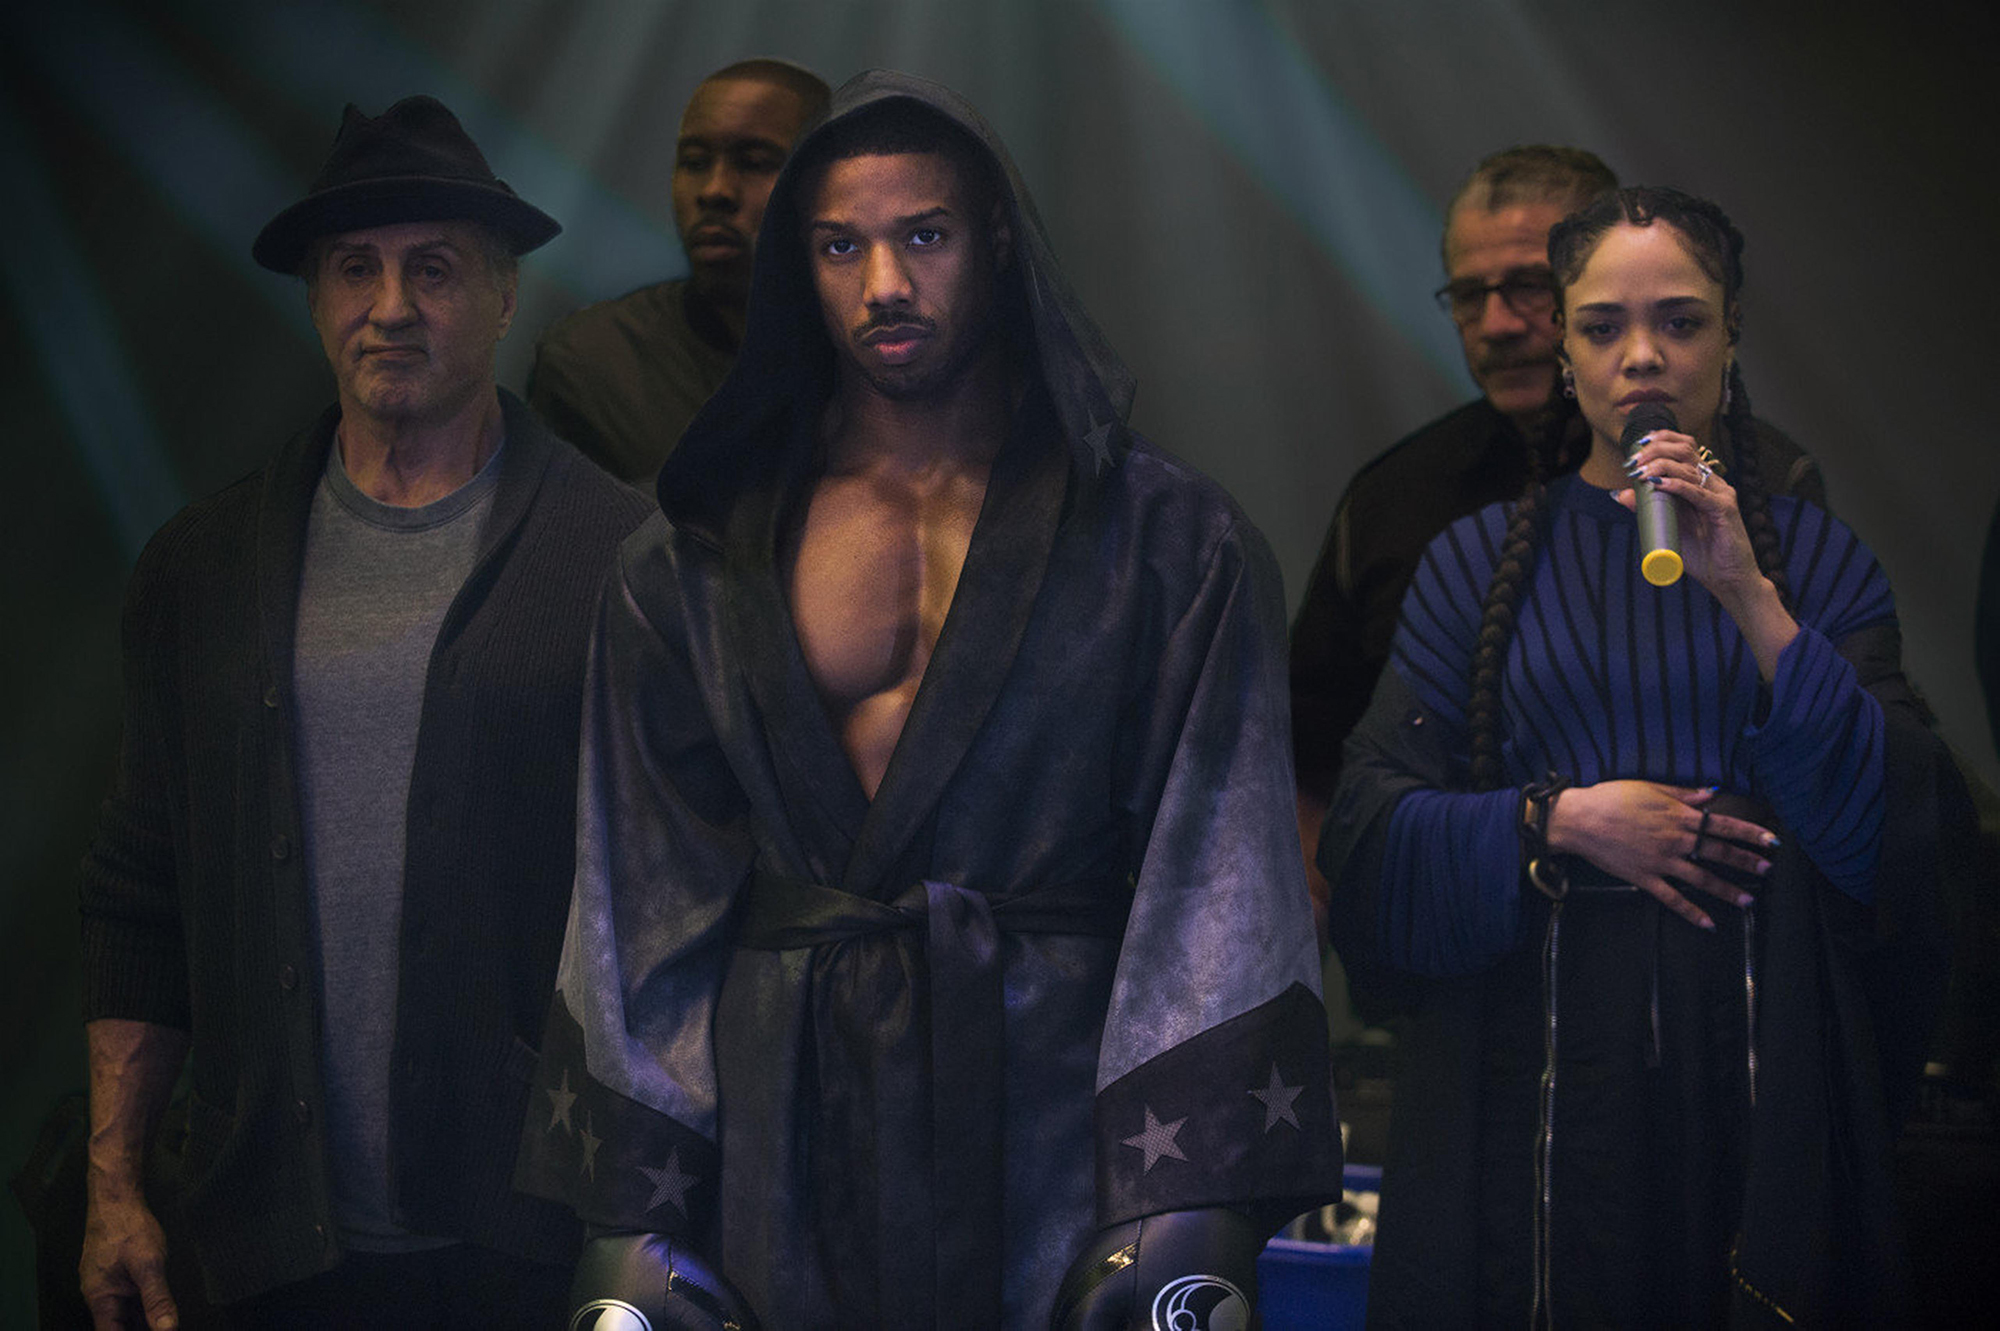 Ralph Lauren unveils 'Creed III' collection starring Michael B